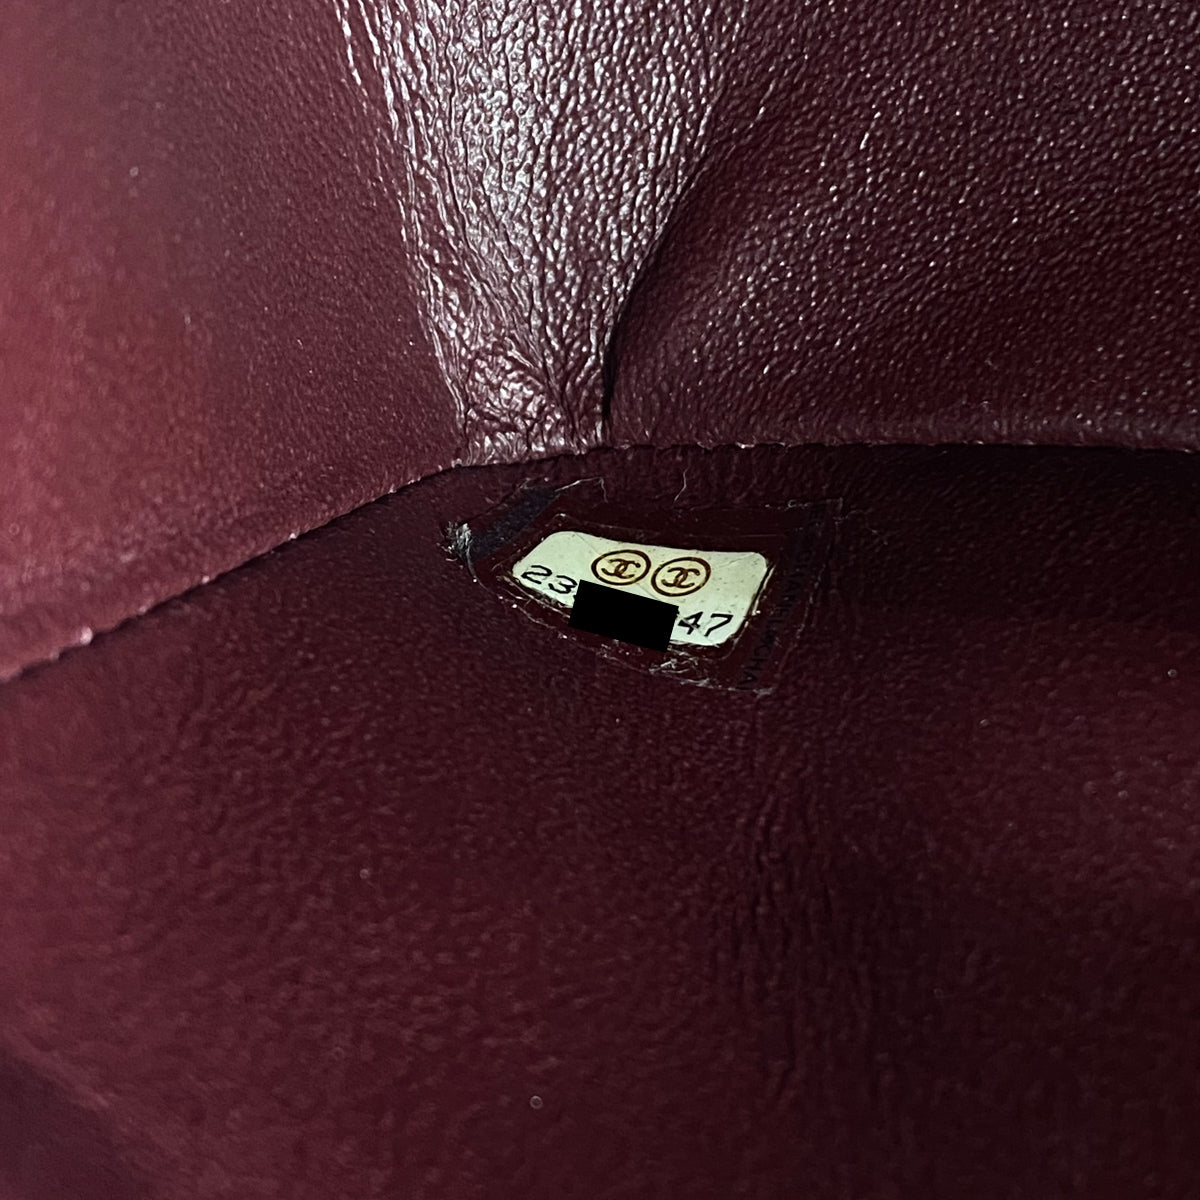 Shop CHANEL Large Classic Handbag (AP0221 Y33352 C3906) by LONDO